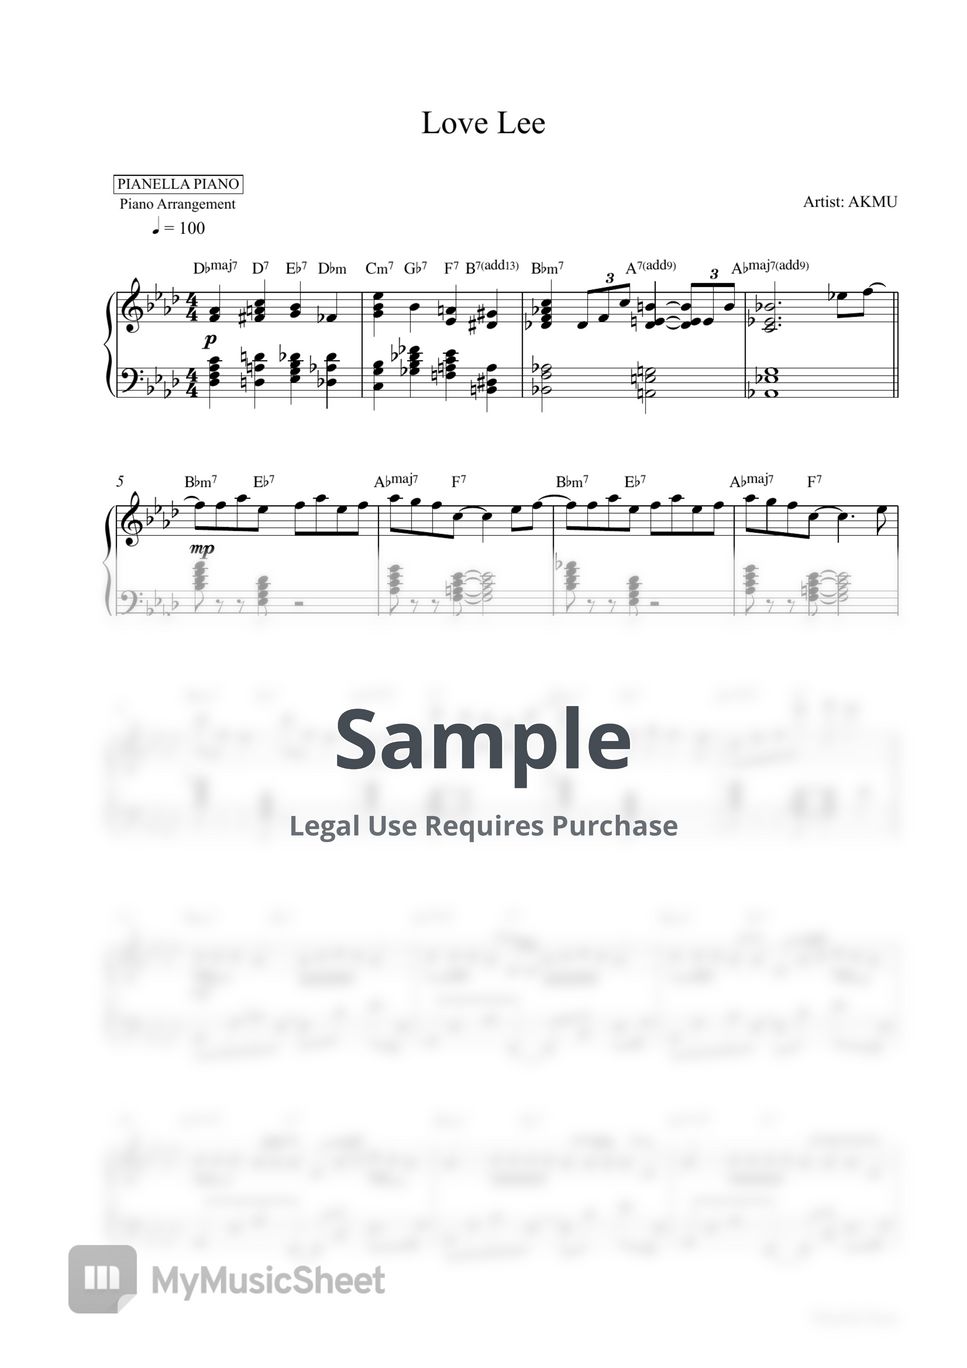 AKMU - Love Lee (Piano Sheet) by Pianella Piano